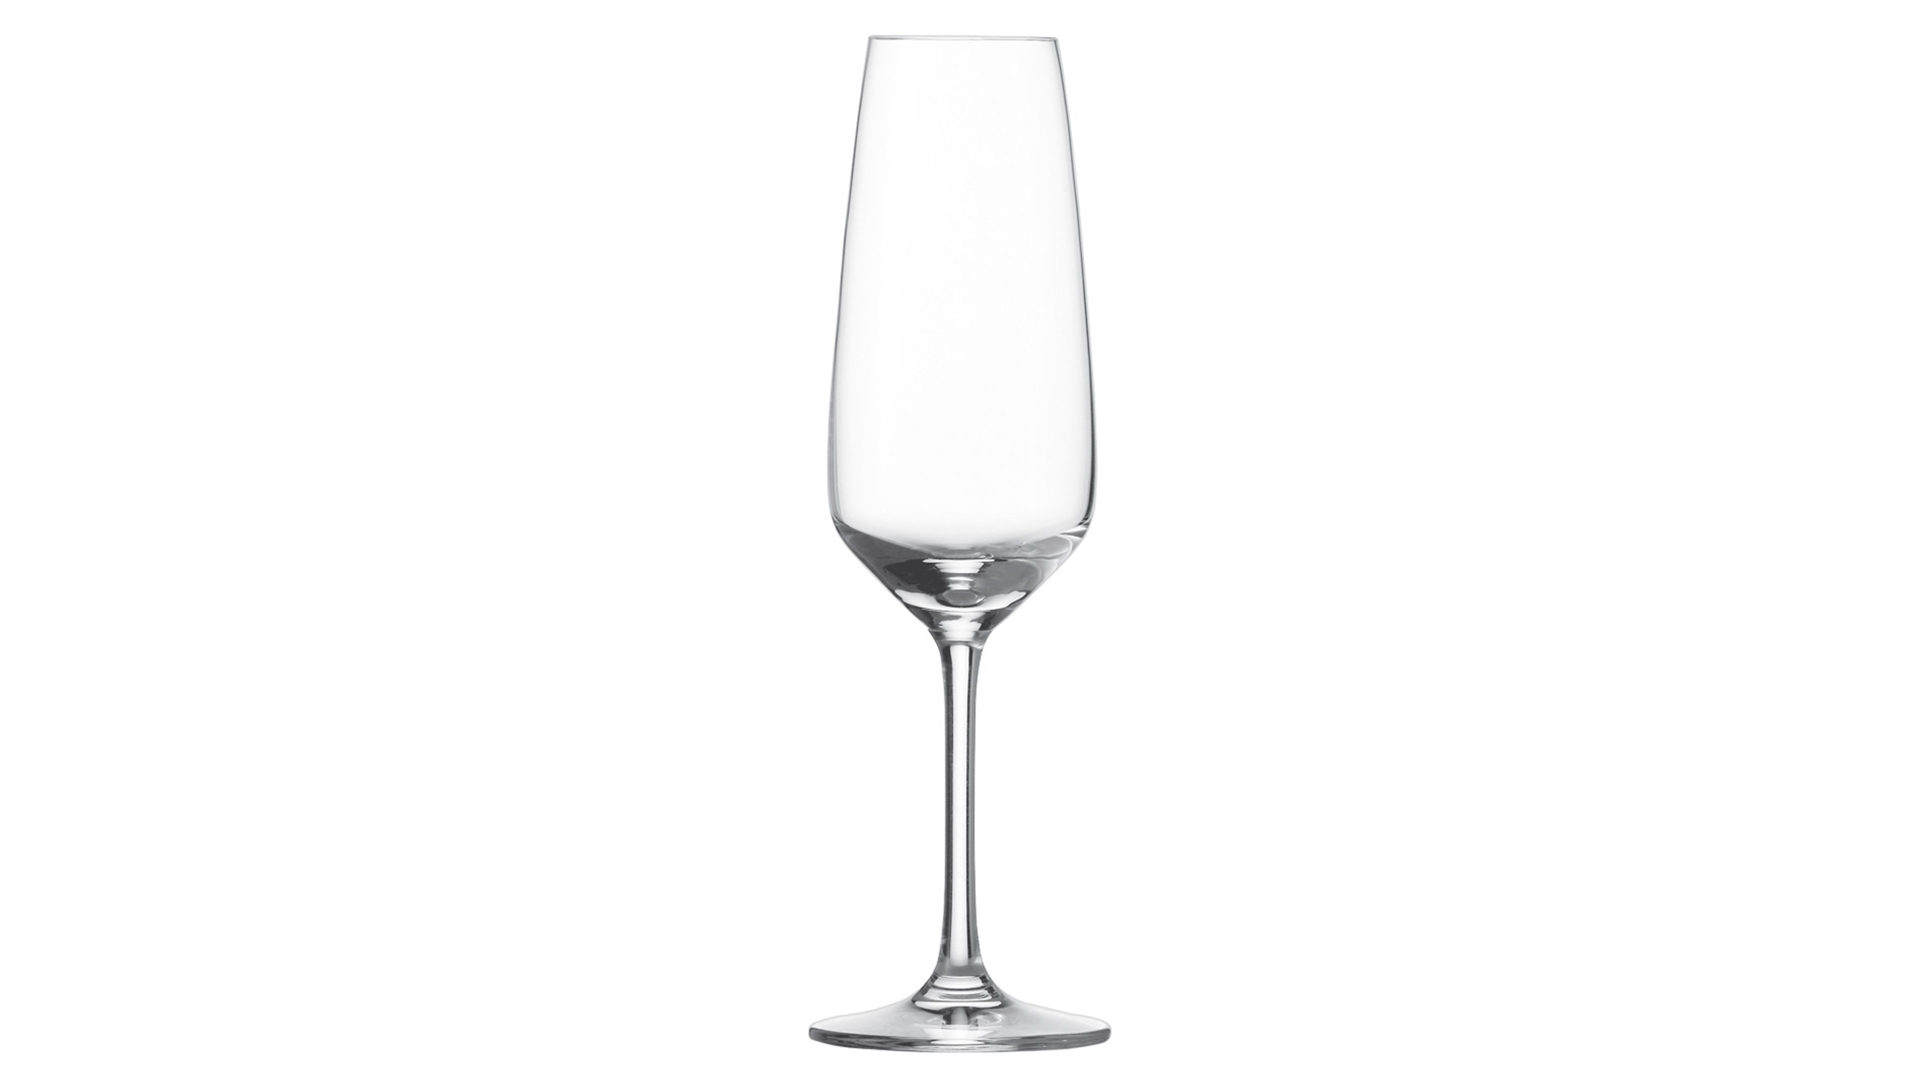 Sektglas Schott zwiesel aus Glas in Transparent SCHOTT ZWIESEL Sektglas Taste Tritan®-Kristallglas – ca. 283 ml